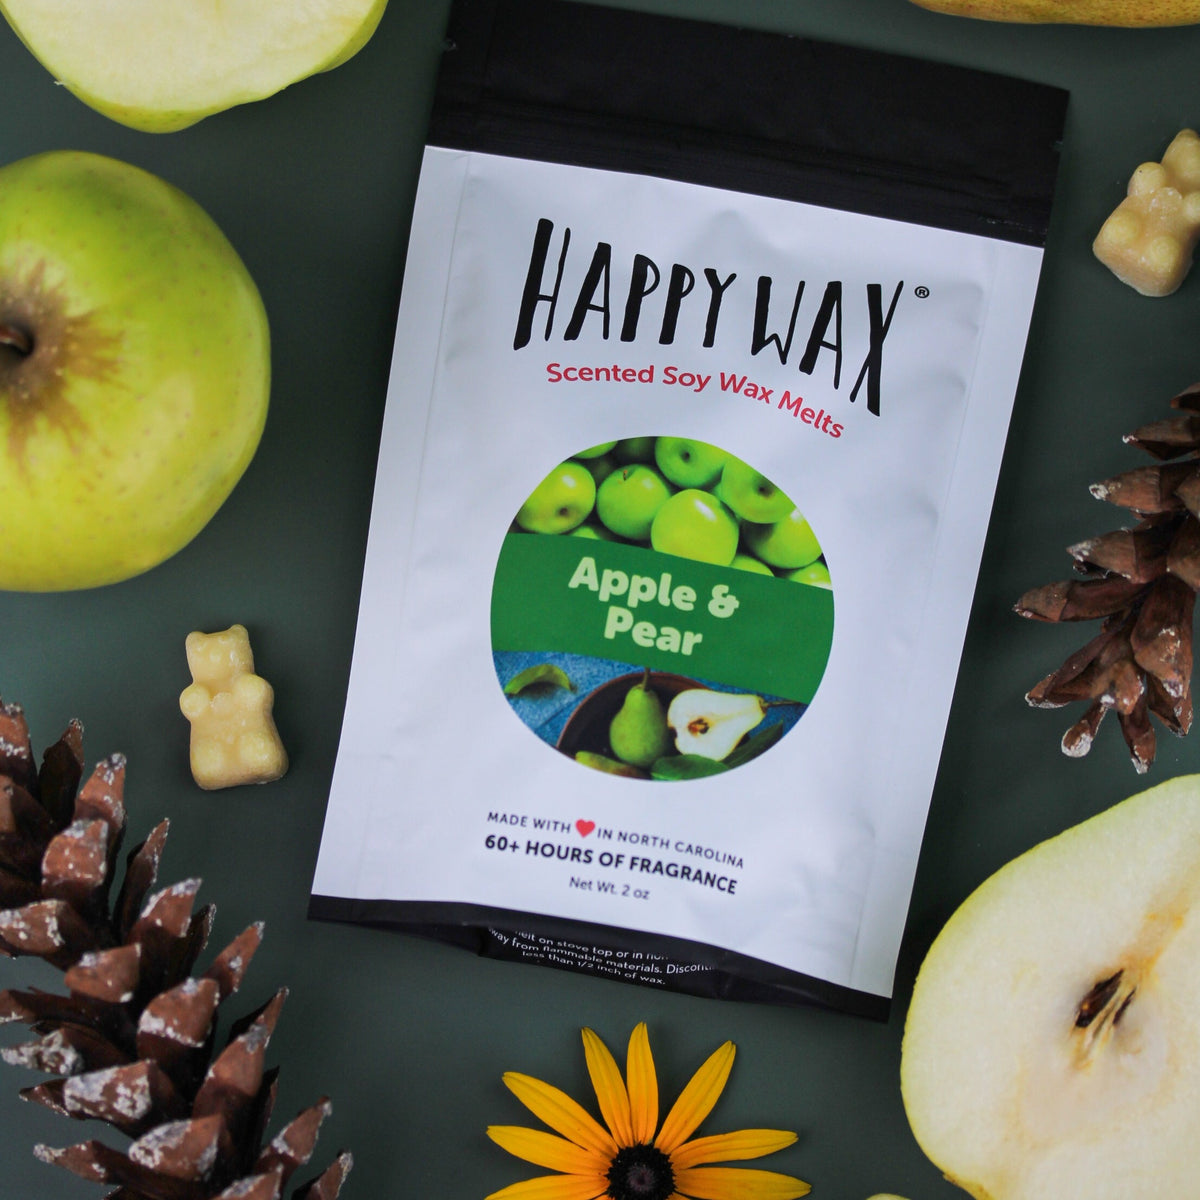 Apple & Pear Wax Melts